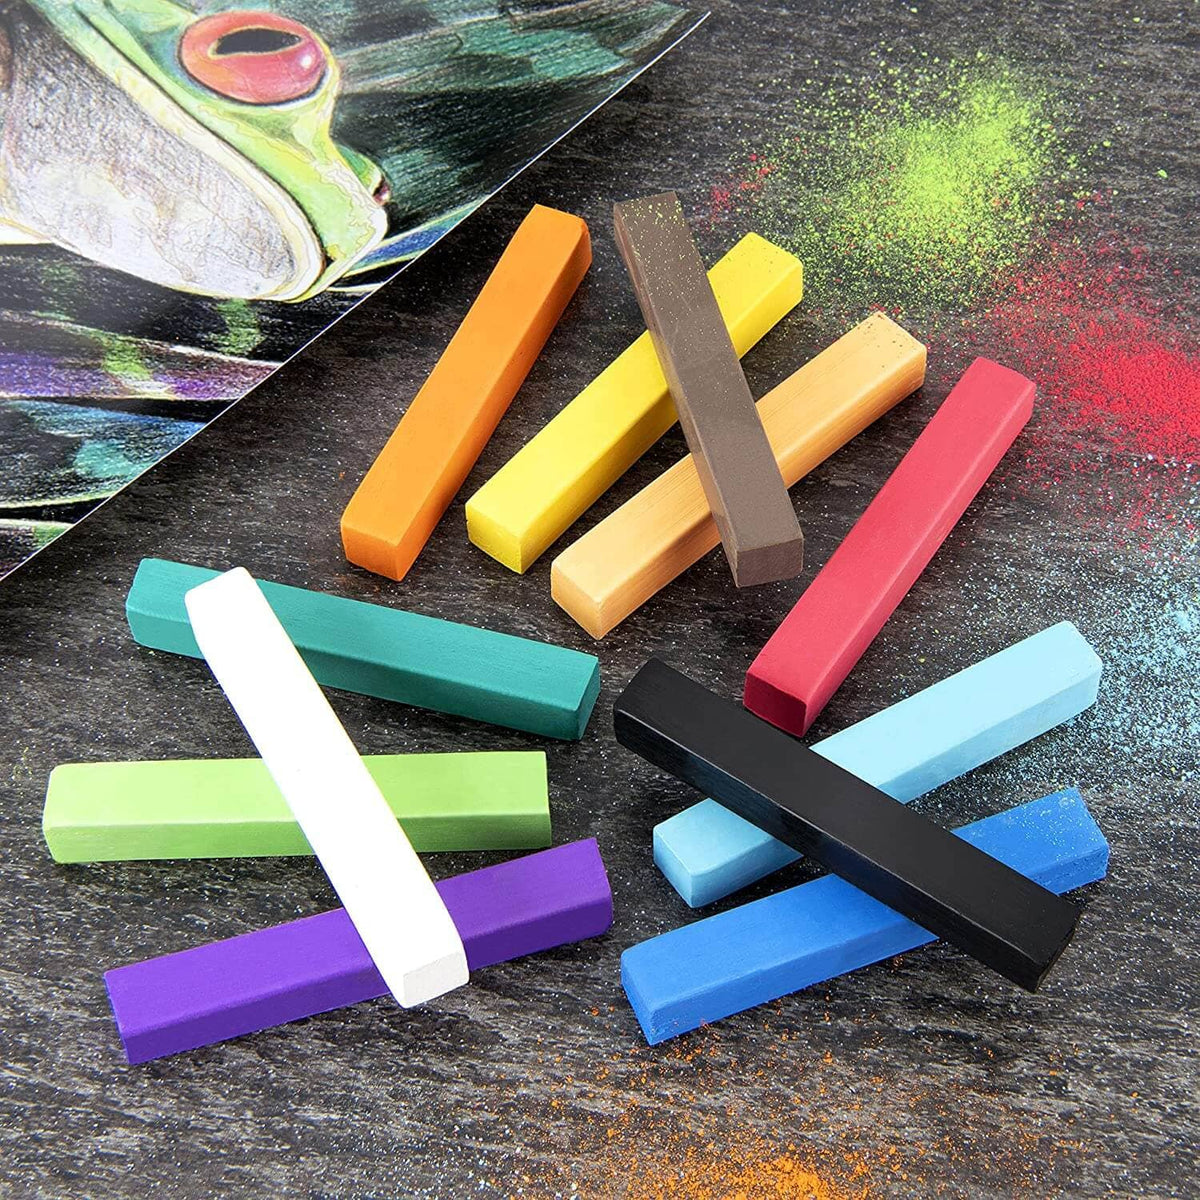 Sargent Art Square Chalk Pastel Set, Assorted Colors, set of 12